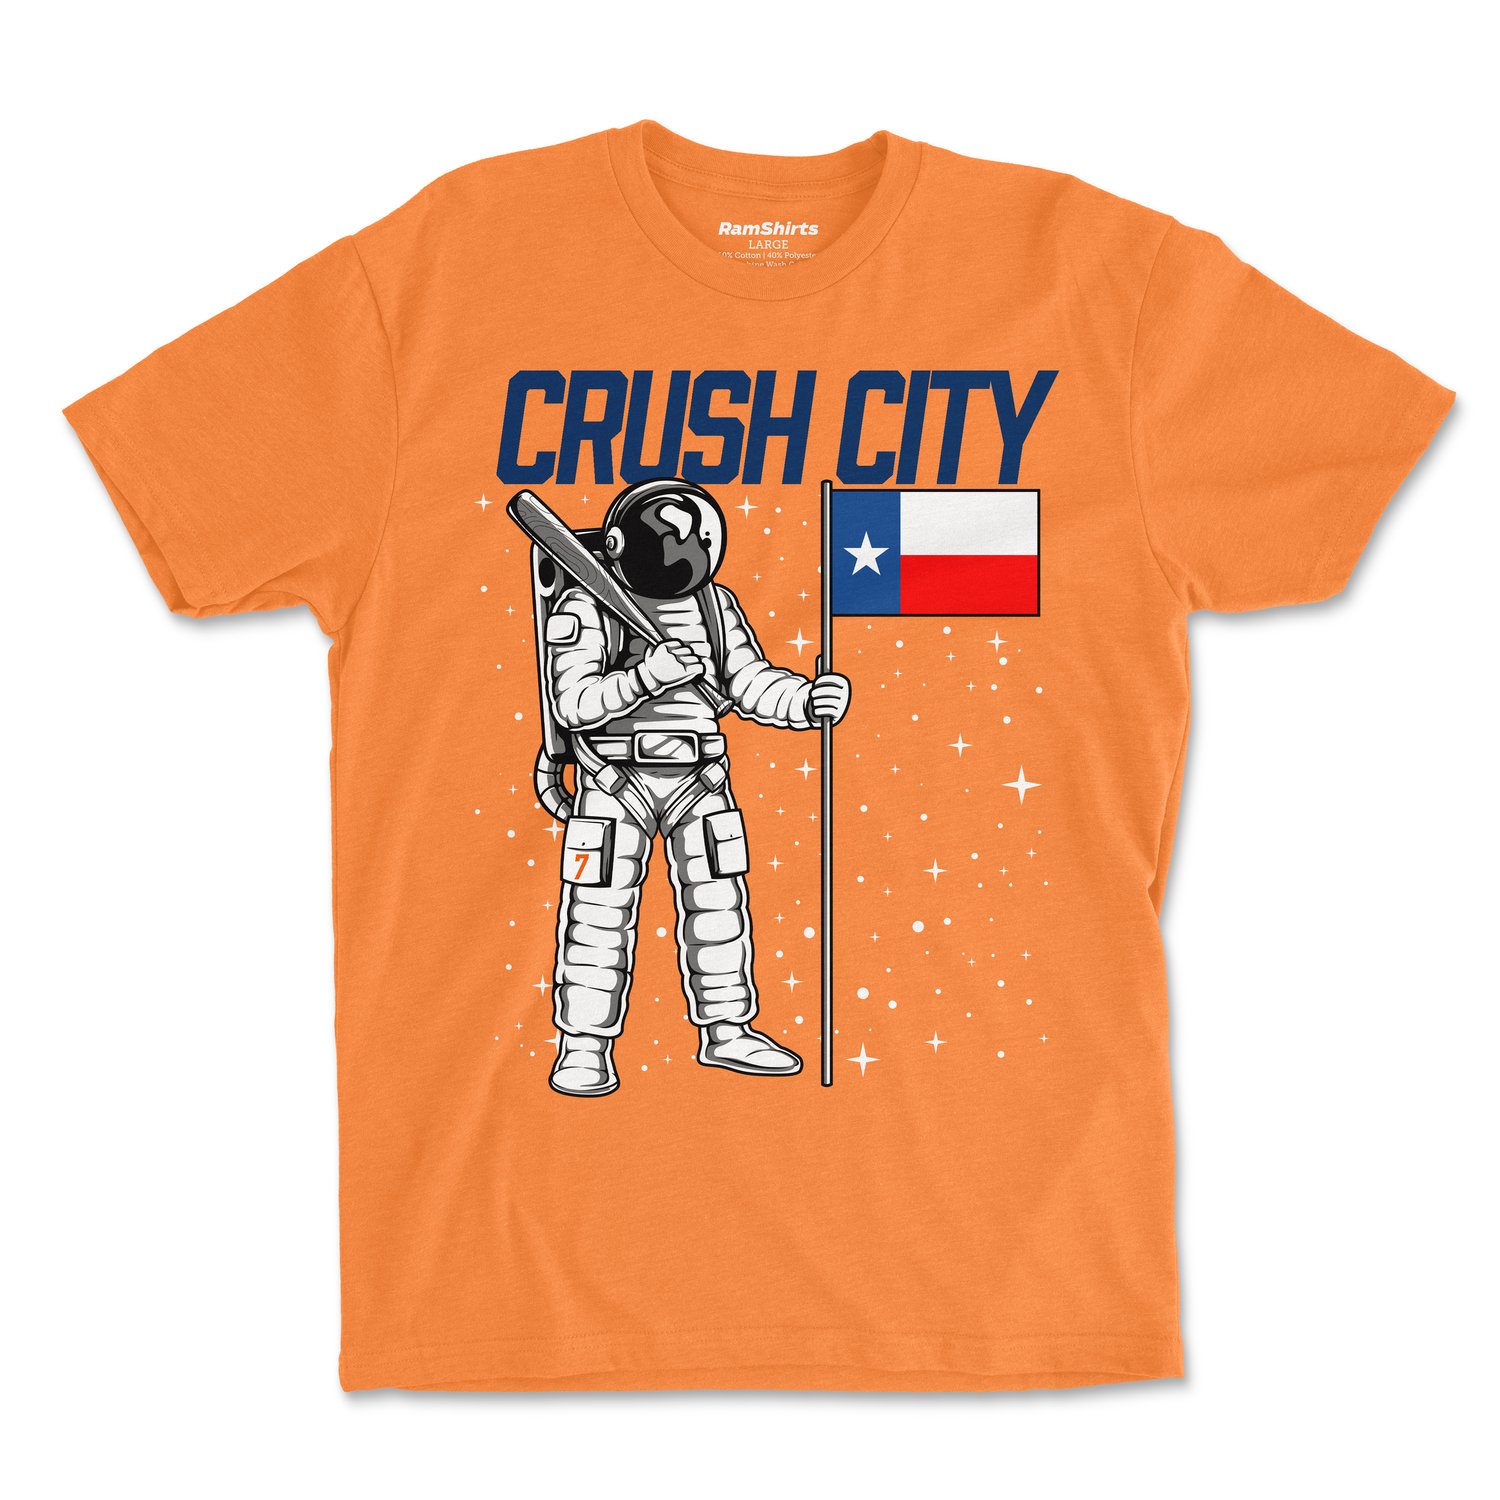 Crush City Astronaut Tee with Flag and Bat T Shirt — RamShirts